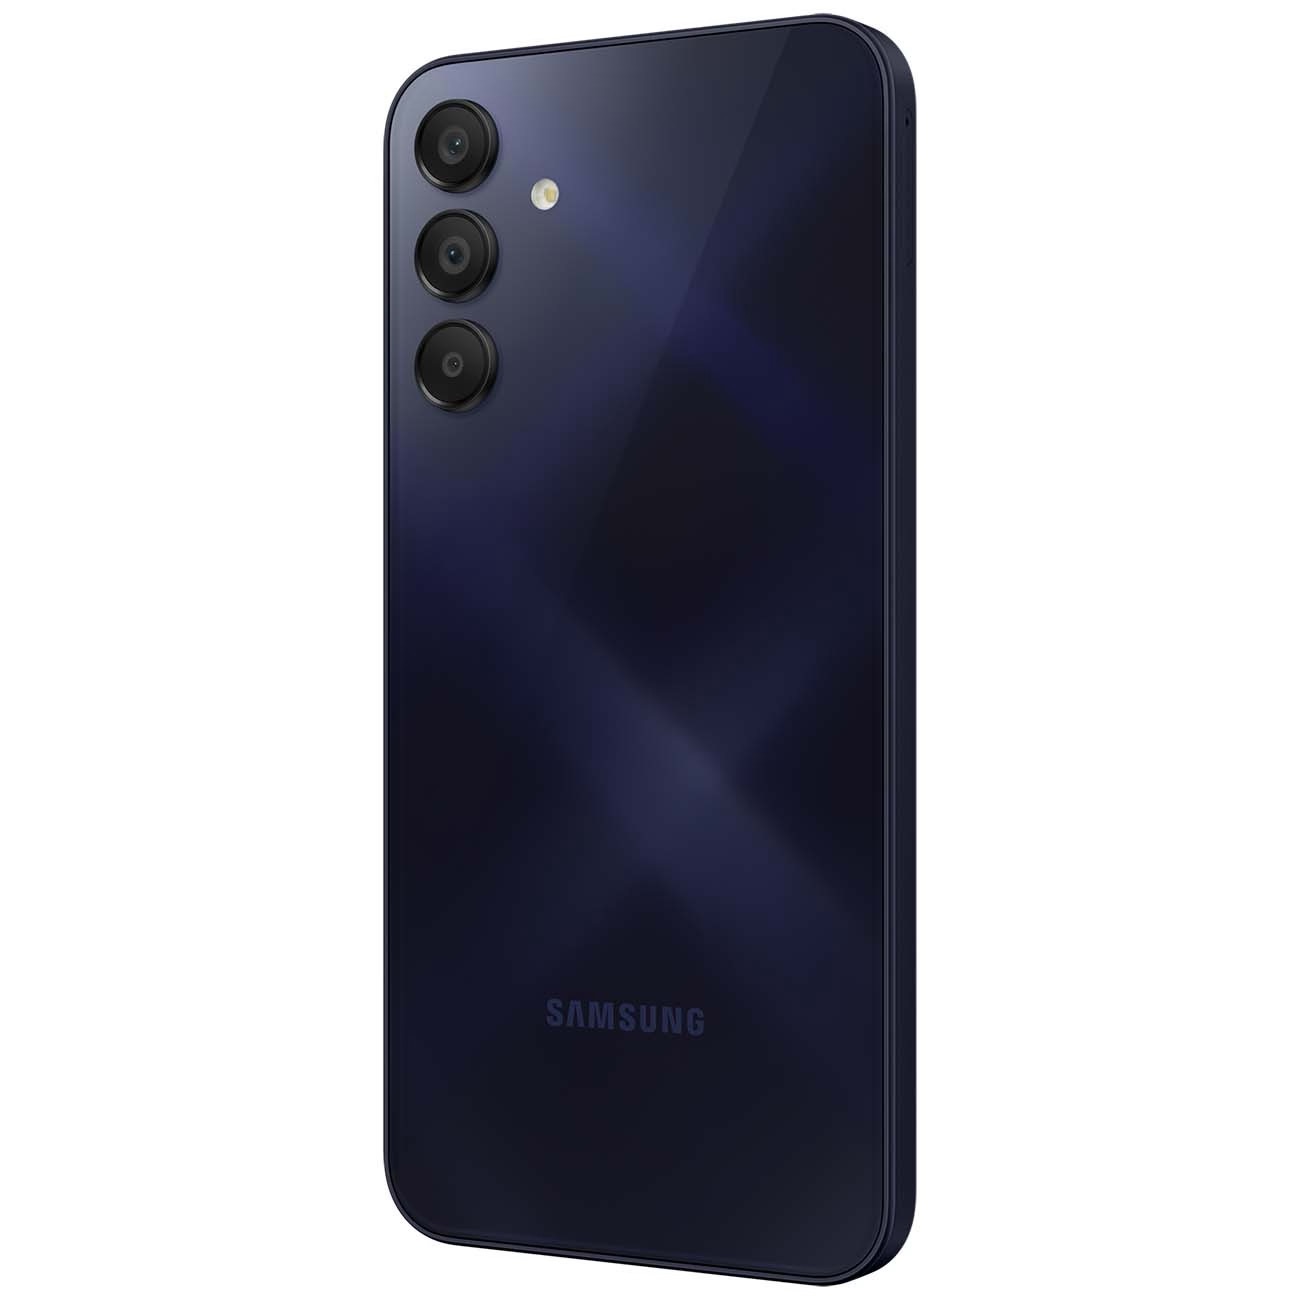 Смартфон Samsung Galaxy A15 8/256GB Blue Black (для других стран)